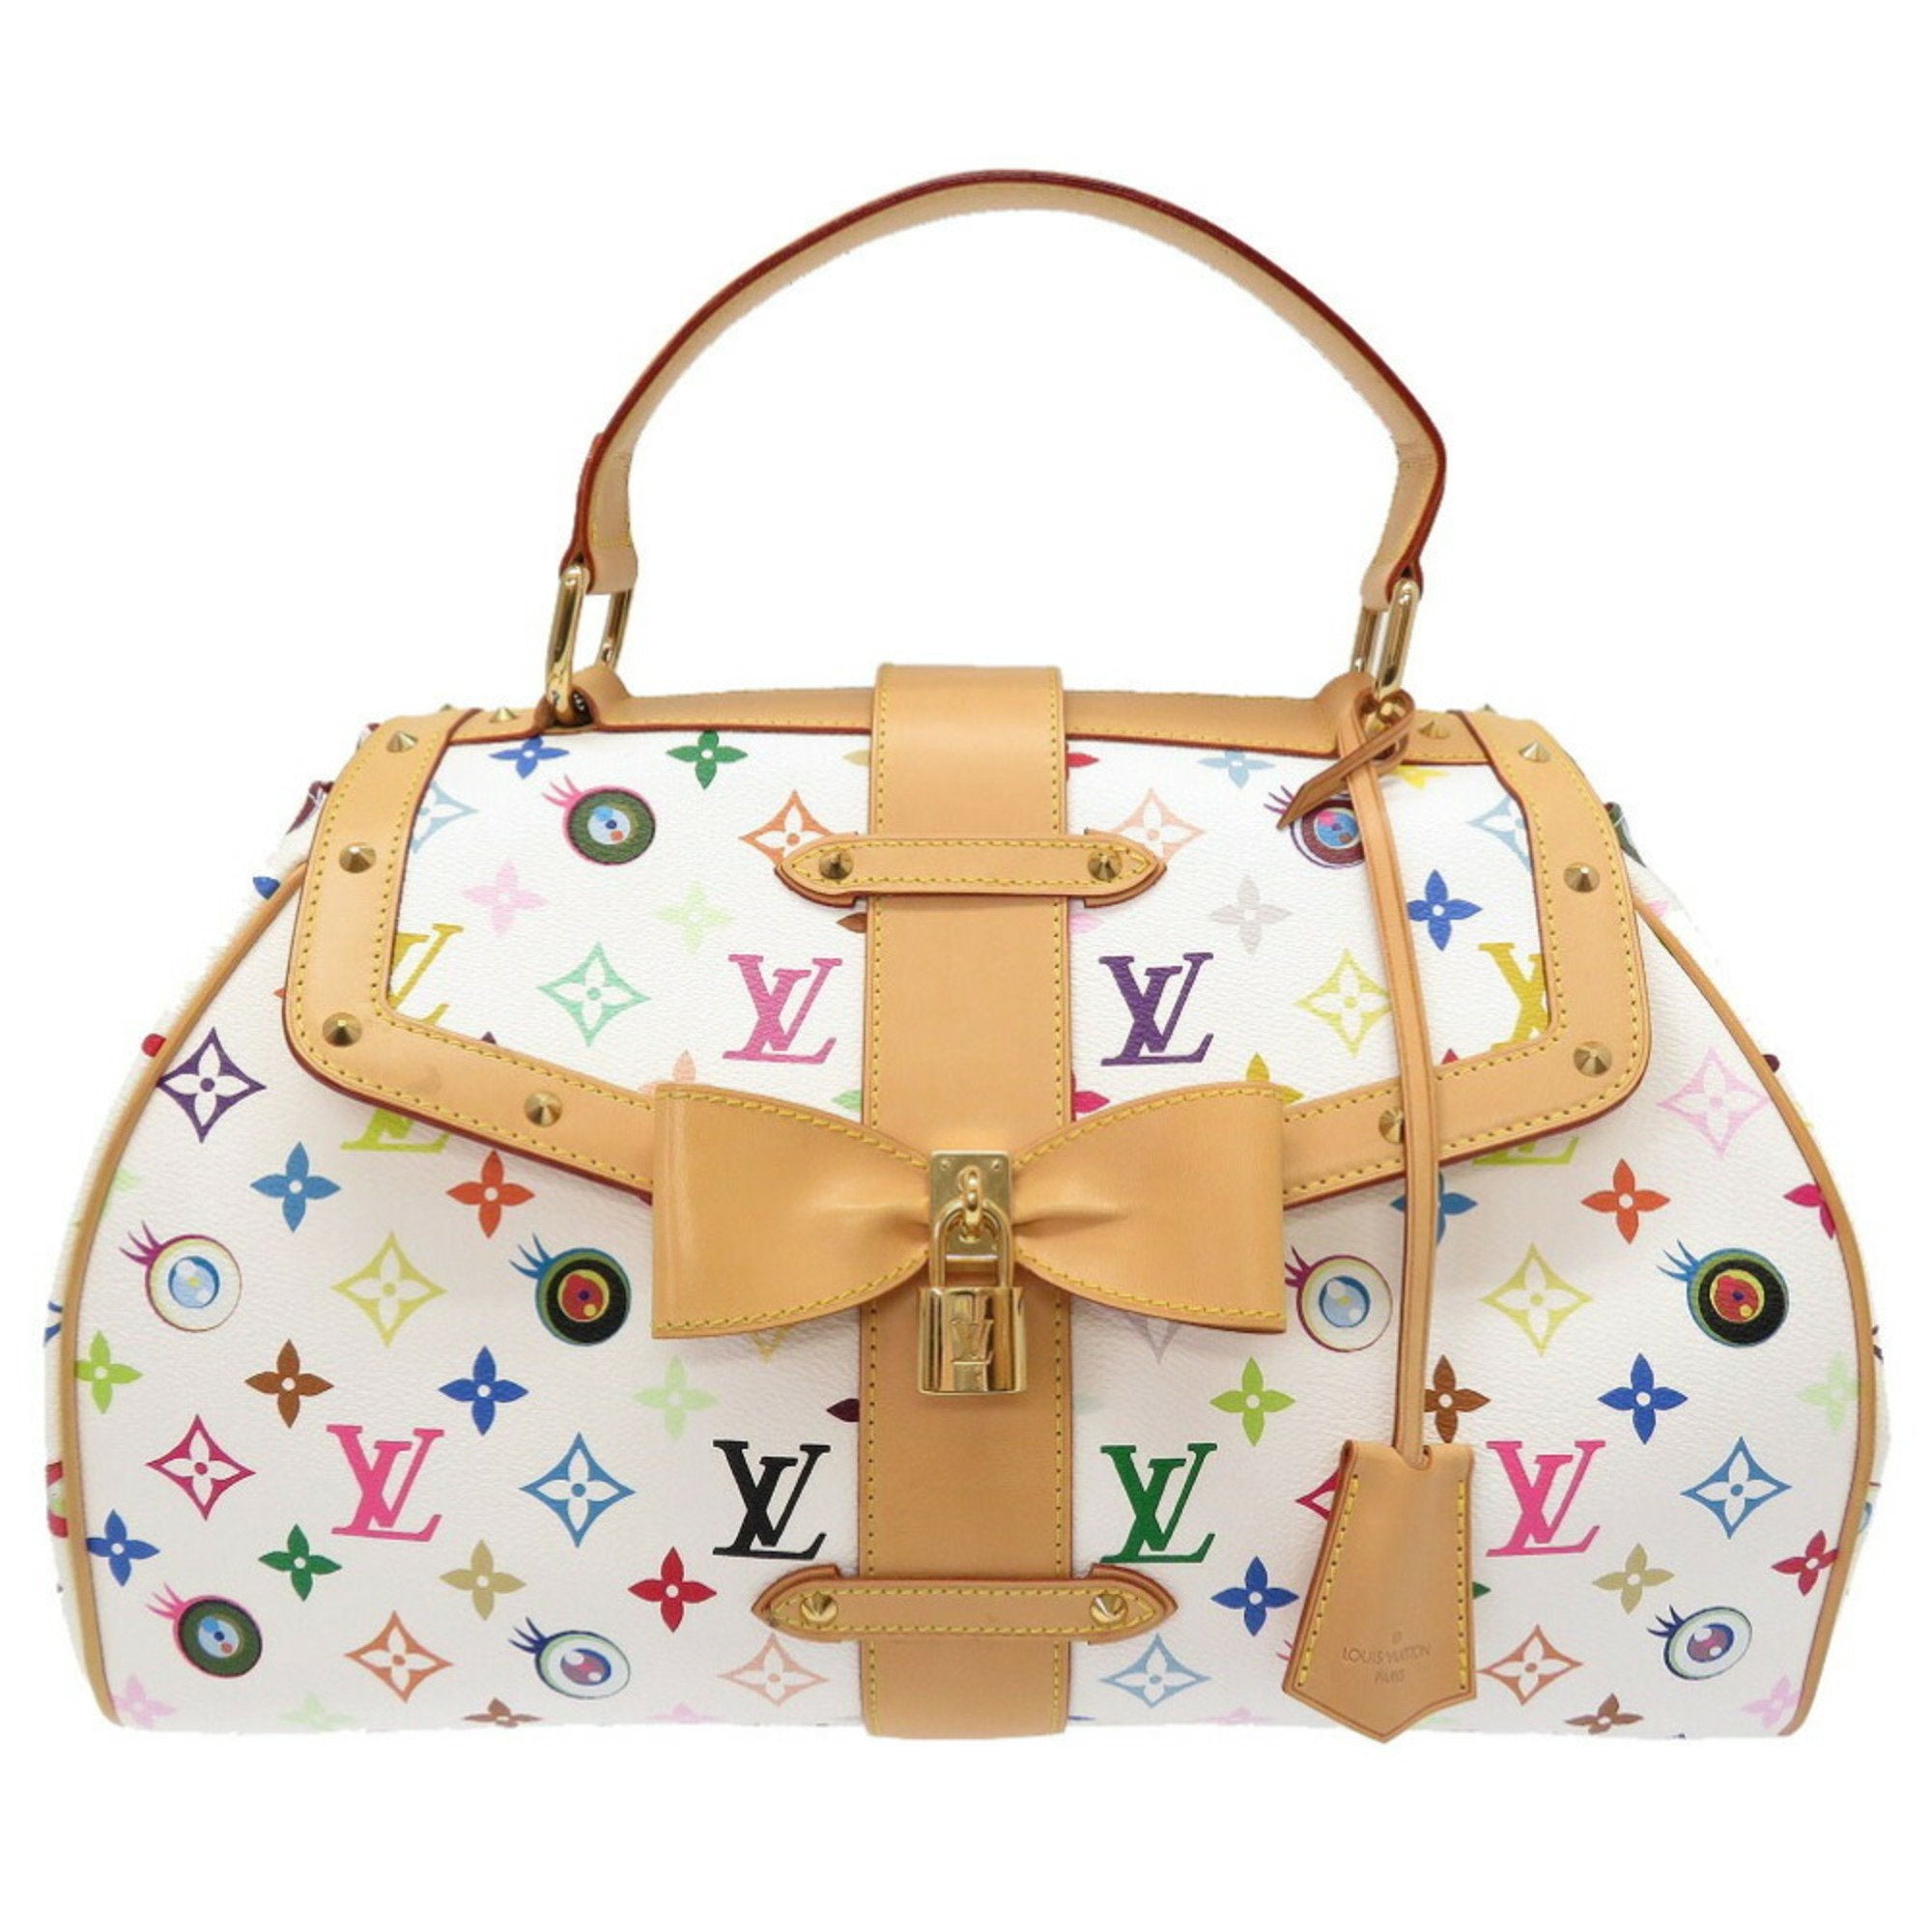 Stunning white Louis Vuitton style bag